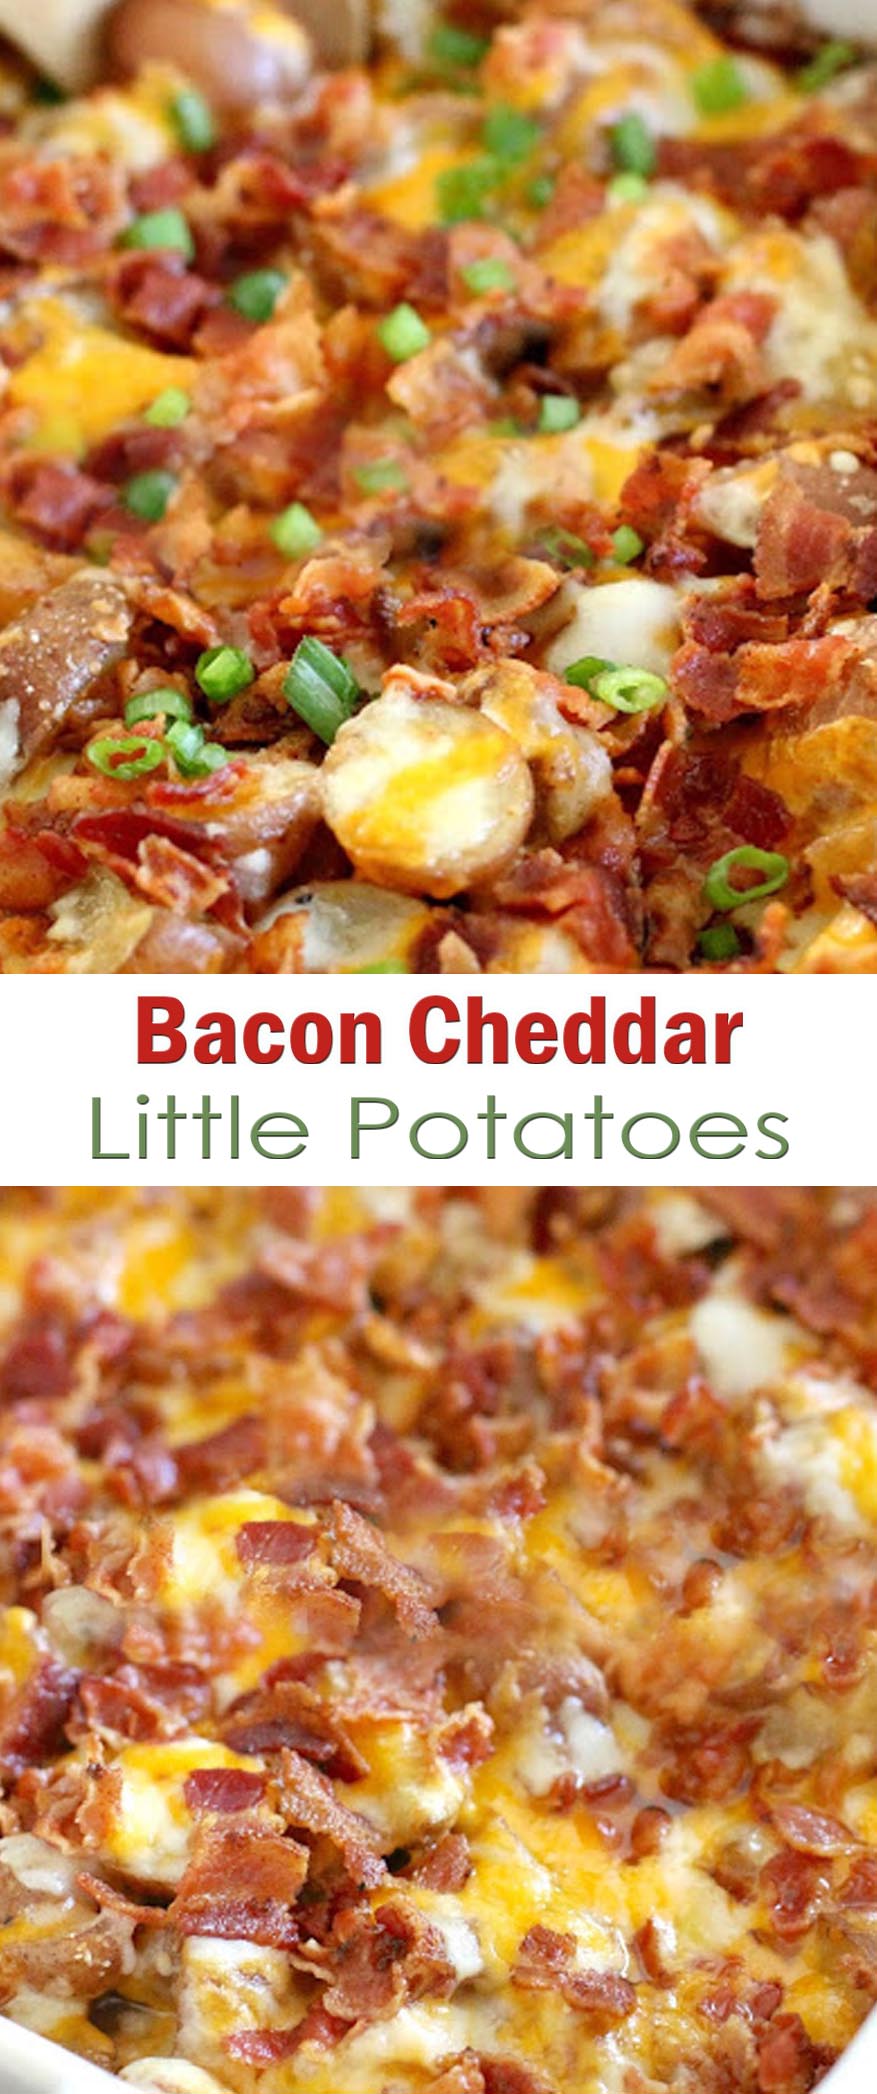 Bacon Cheddar Little Potatoes